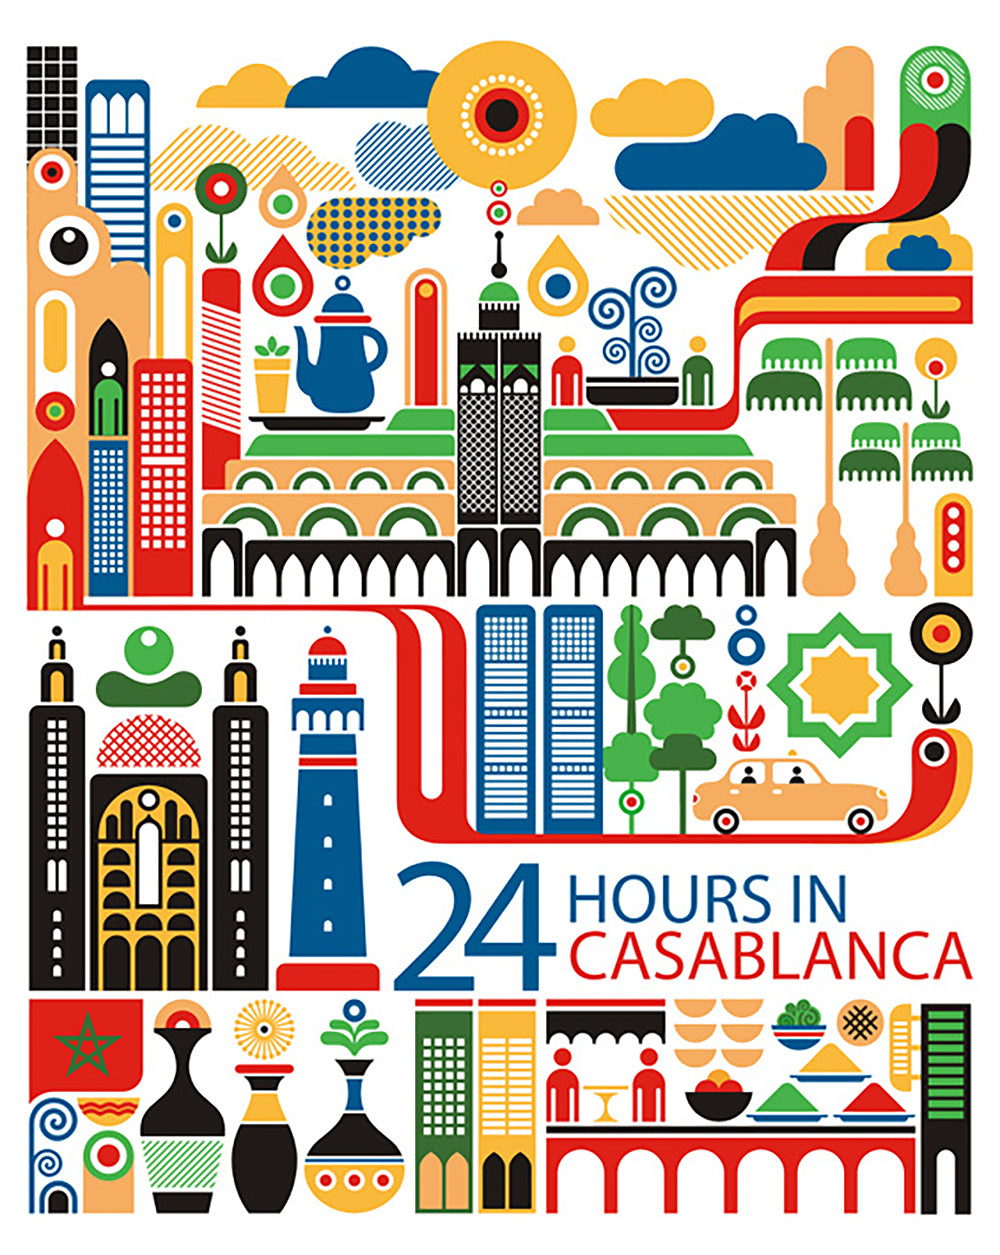 Safari Journal / Blog by Safari Fusion | 24 hours in Casablanca | Modern travel posters by graphic designer Fernando Volken Togni